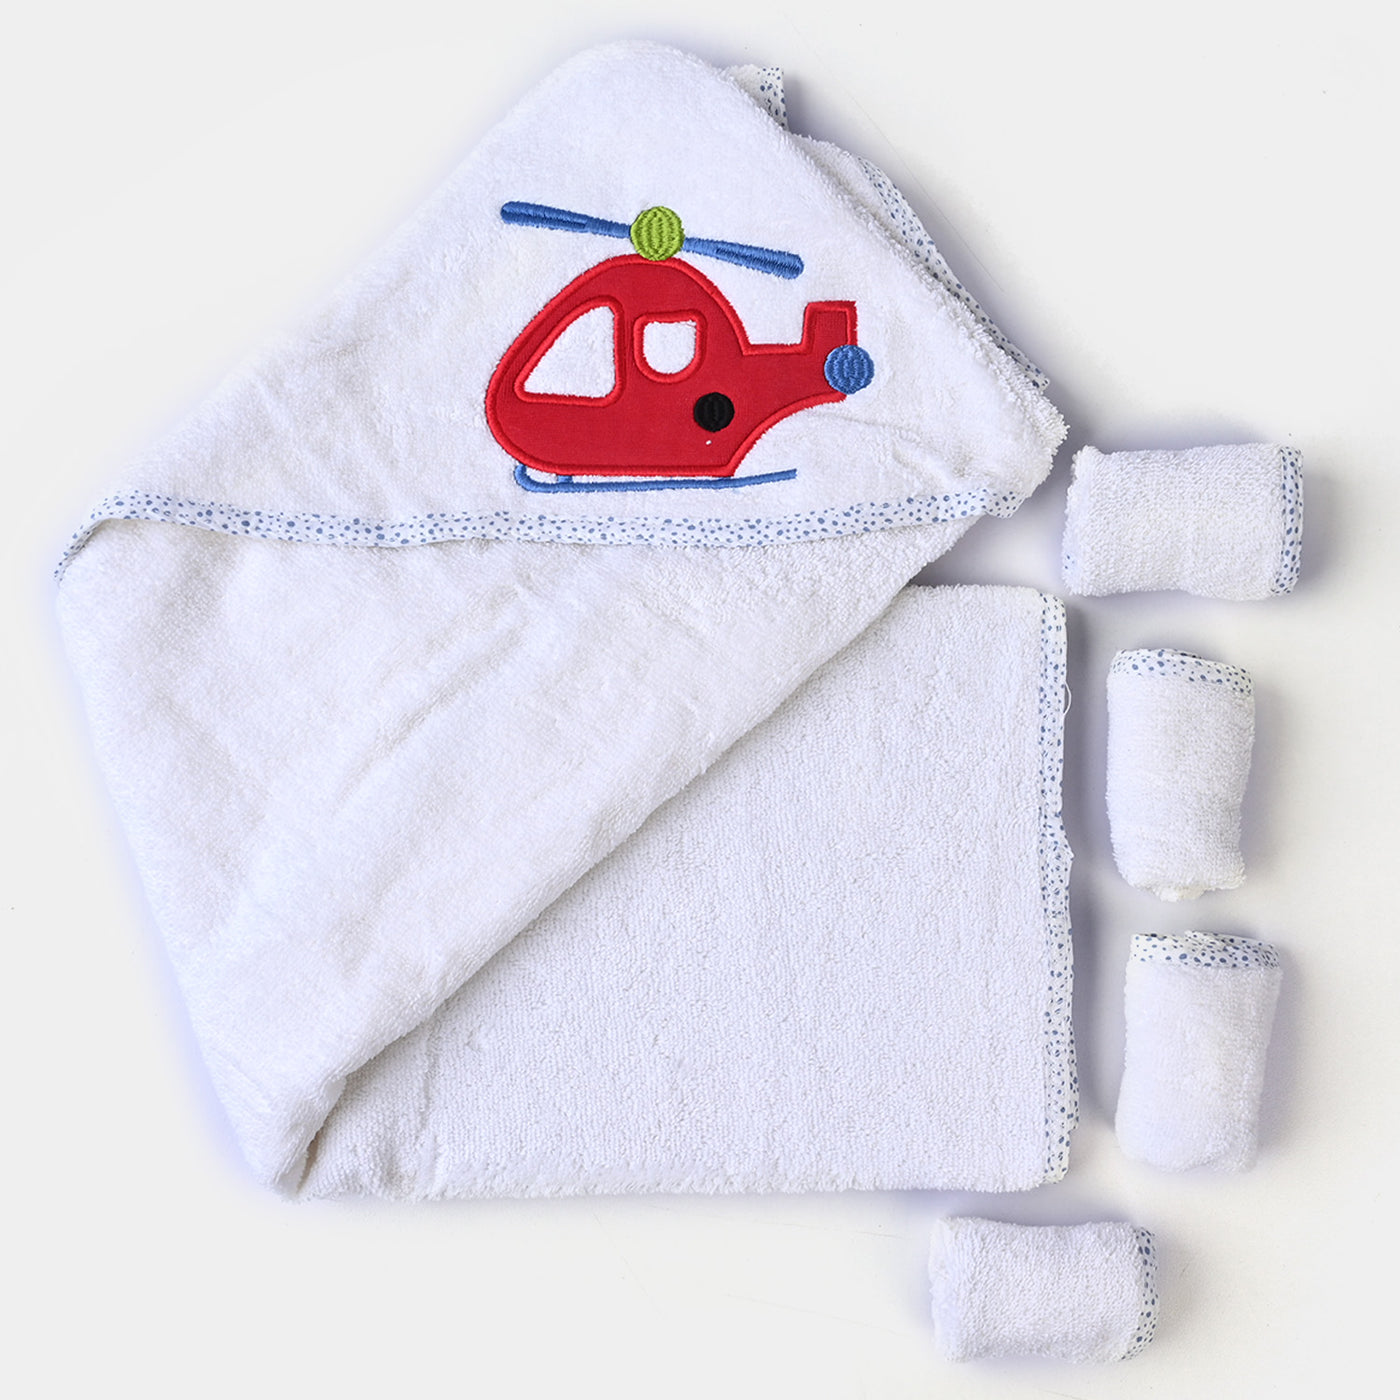 Baby Bath Towel + 4PCs Face Towel